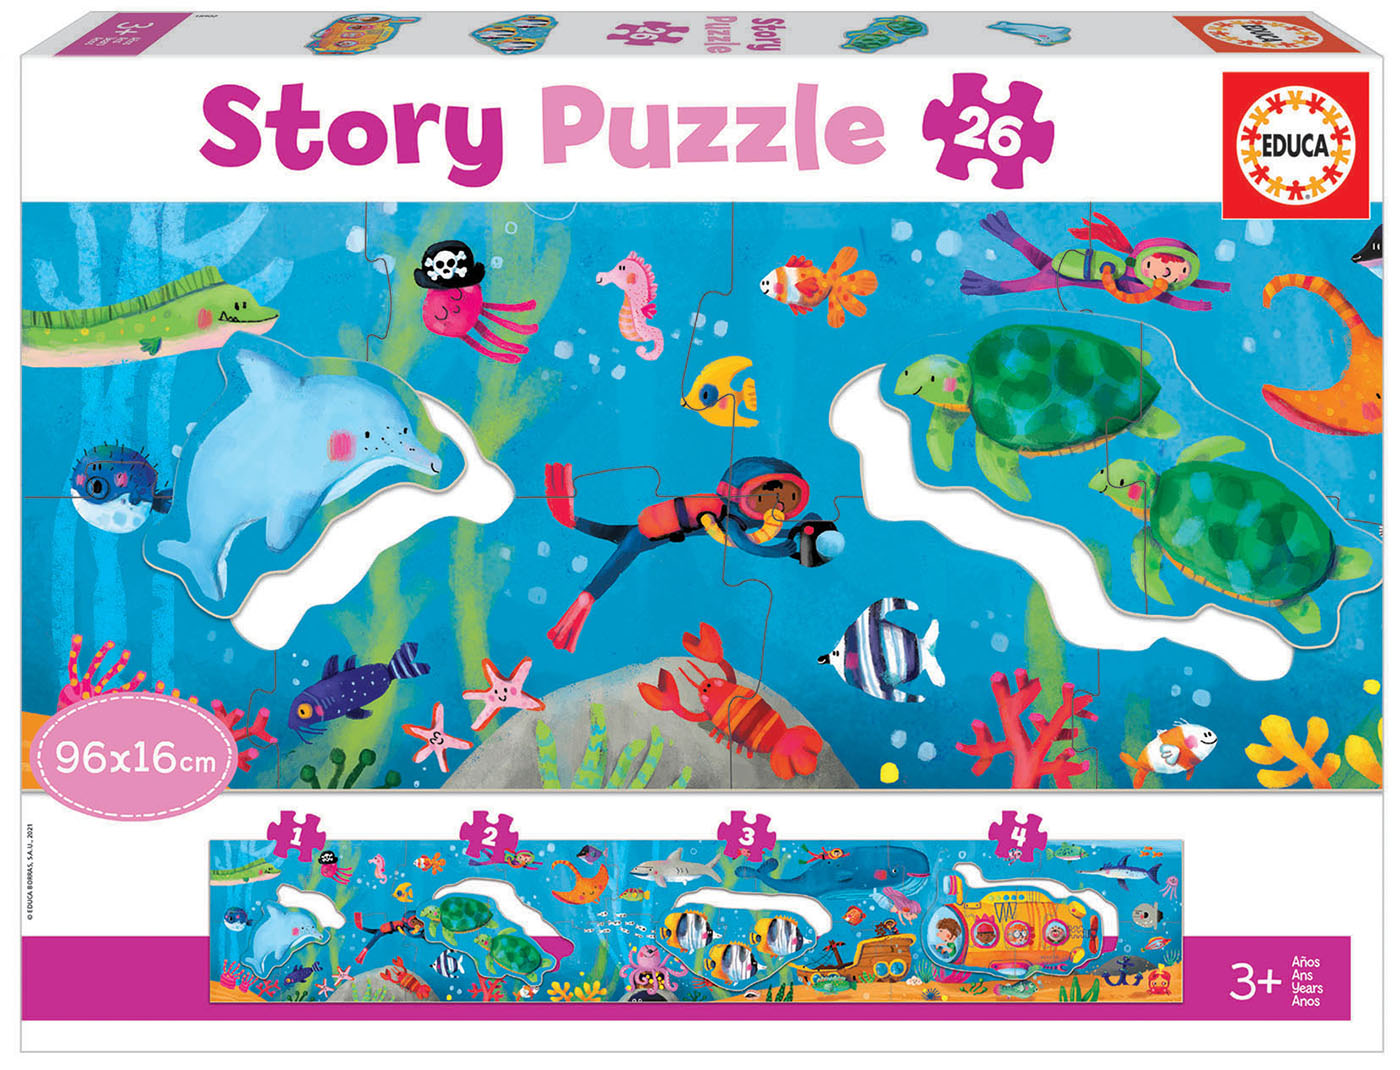 26 Mundo Submarino Story Puzzle